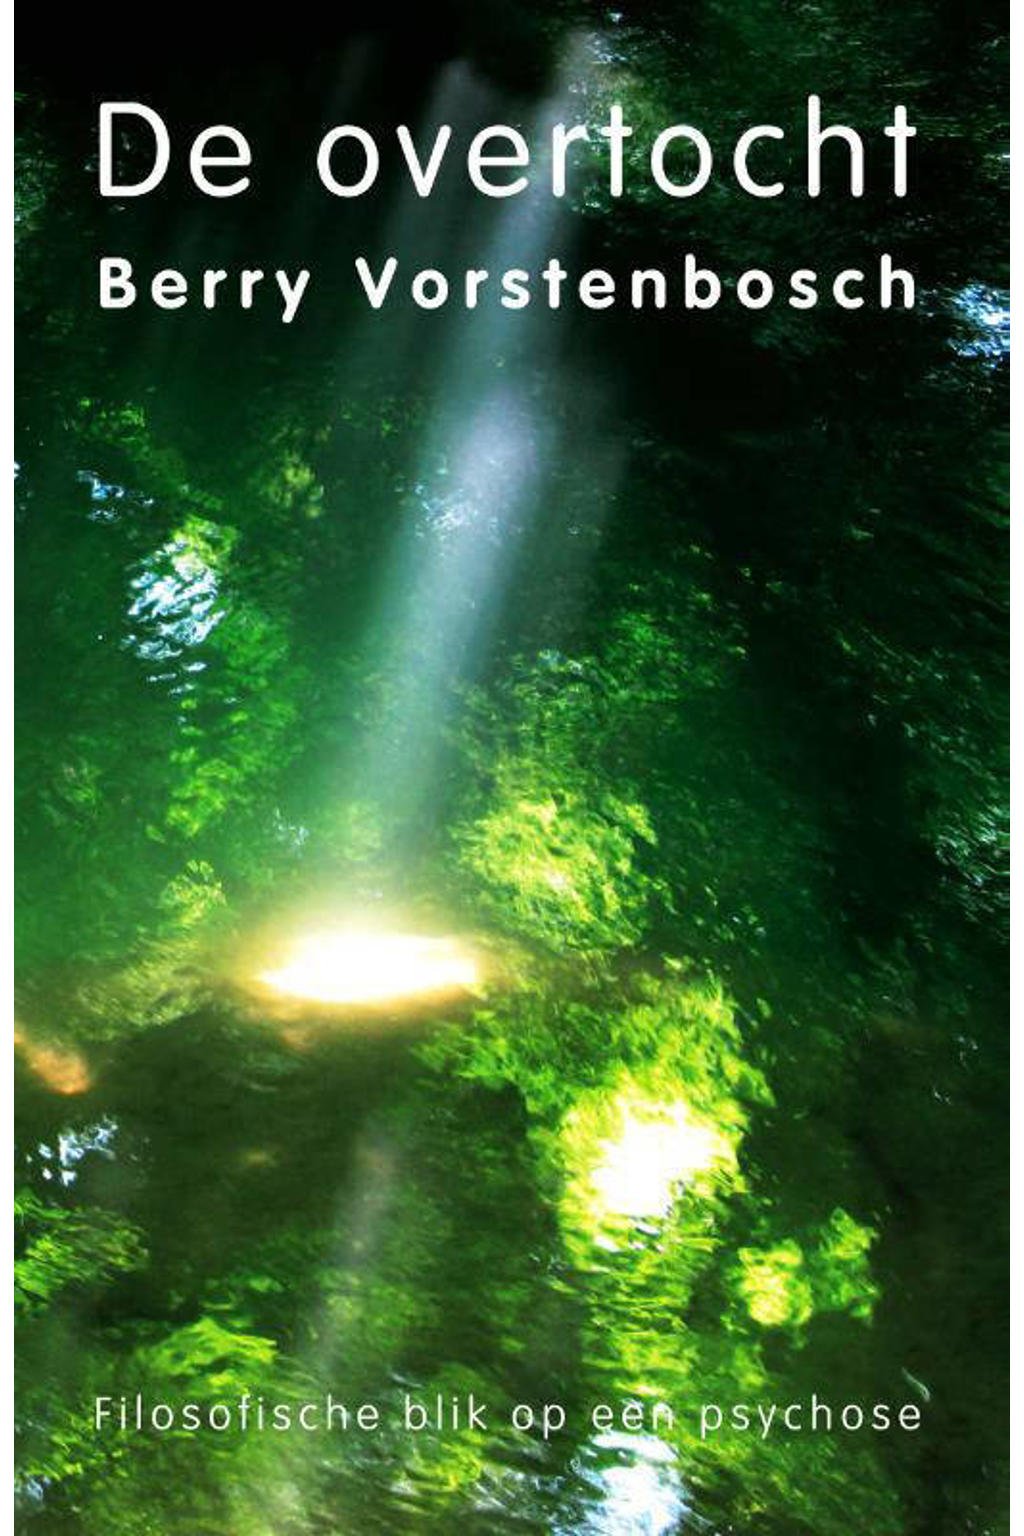 De overtocht - Berry Vorstenbosch